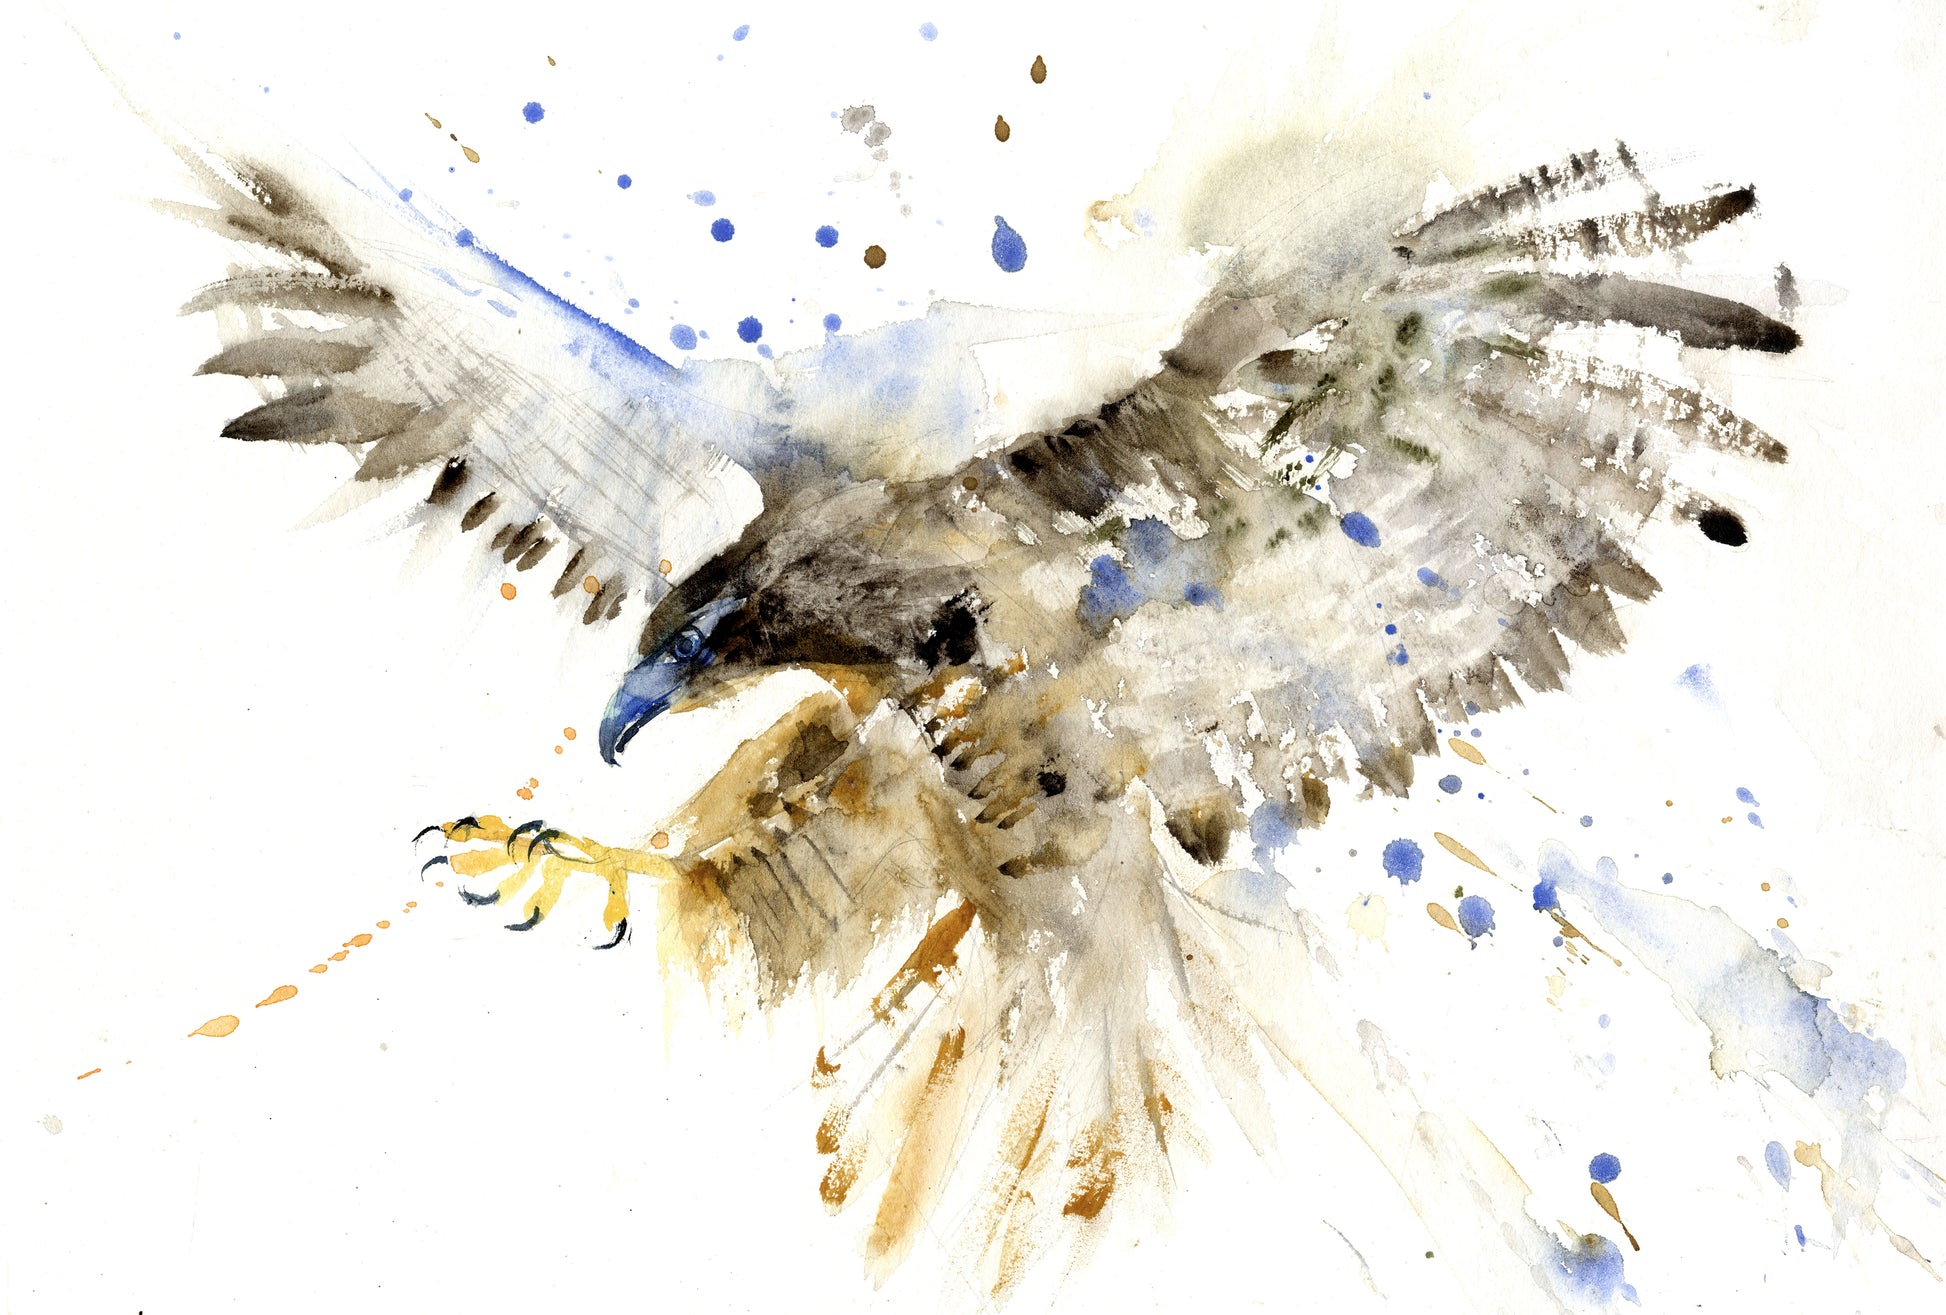 Hawk limited edition art print - Jen Buckley Art limited edition animal art prints